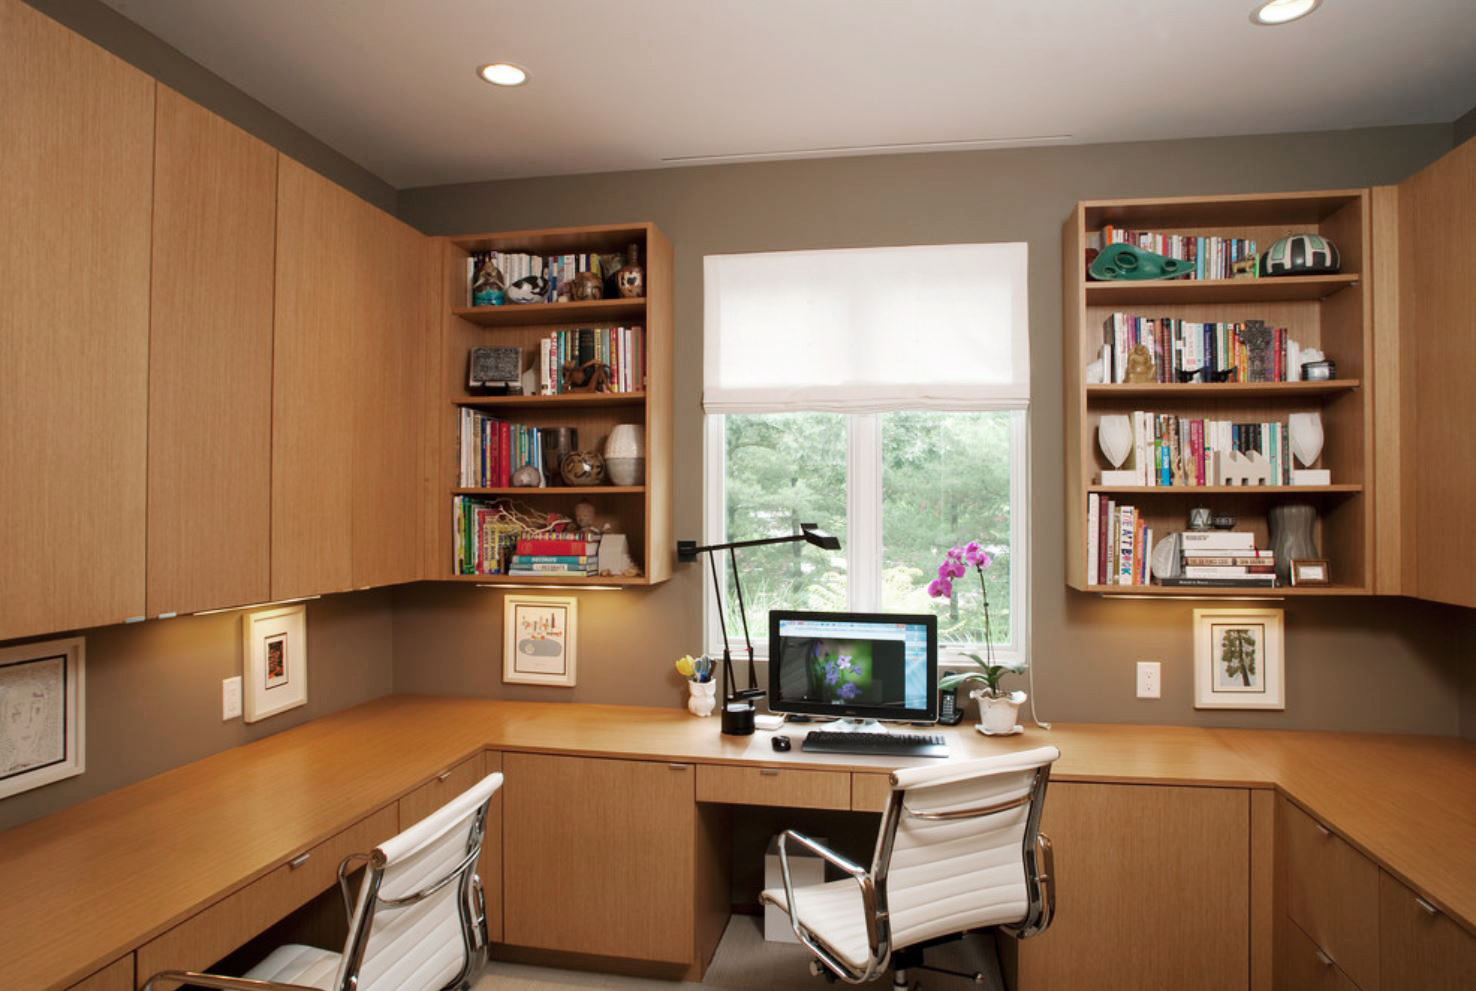 Home Office Decor Ideas Under $100 » We're The Joneses